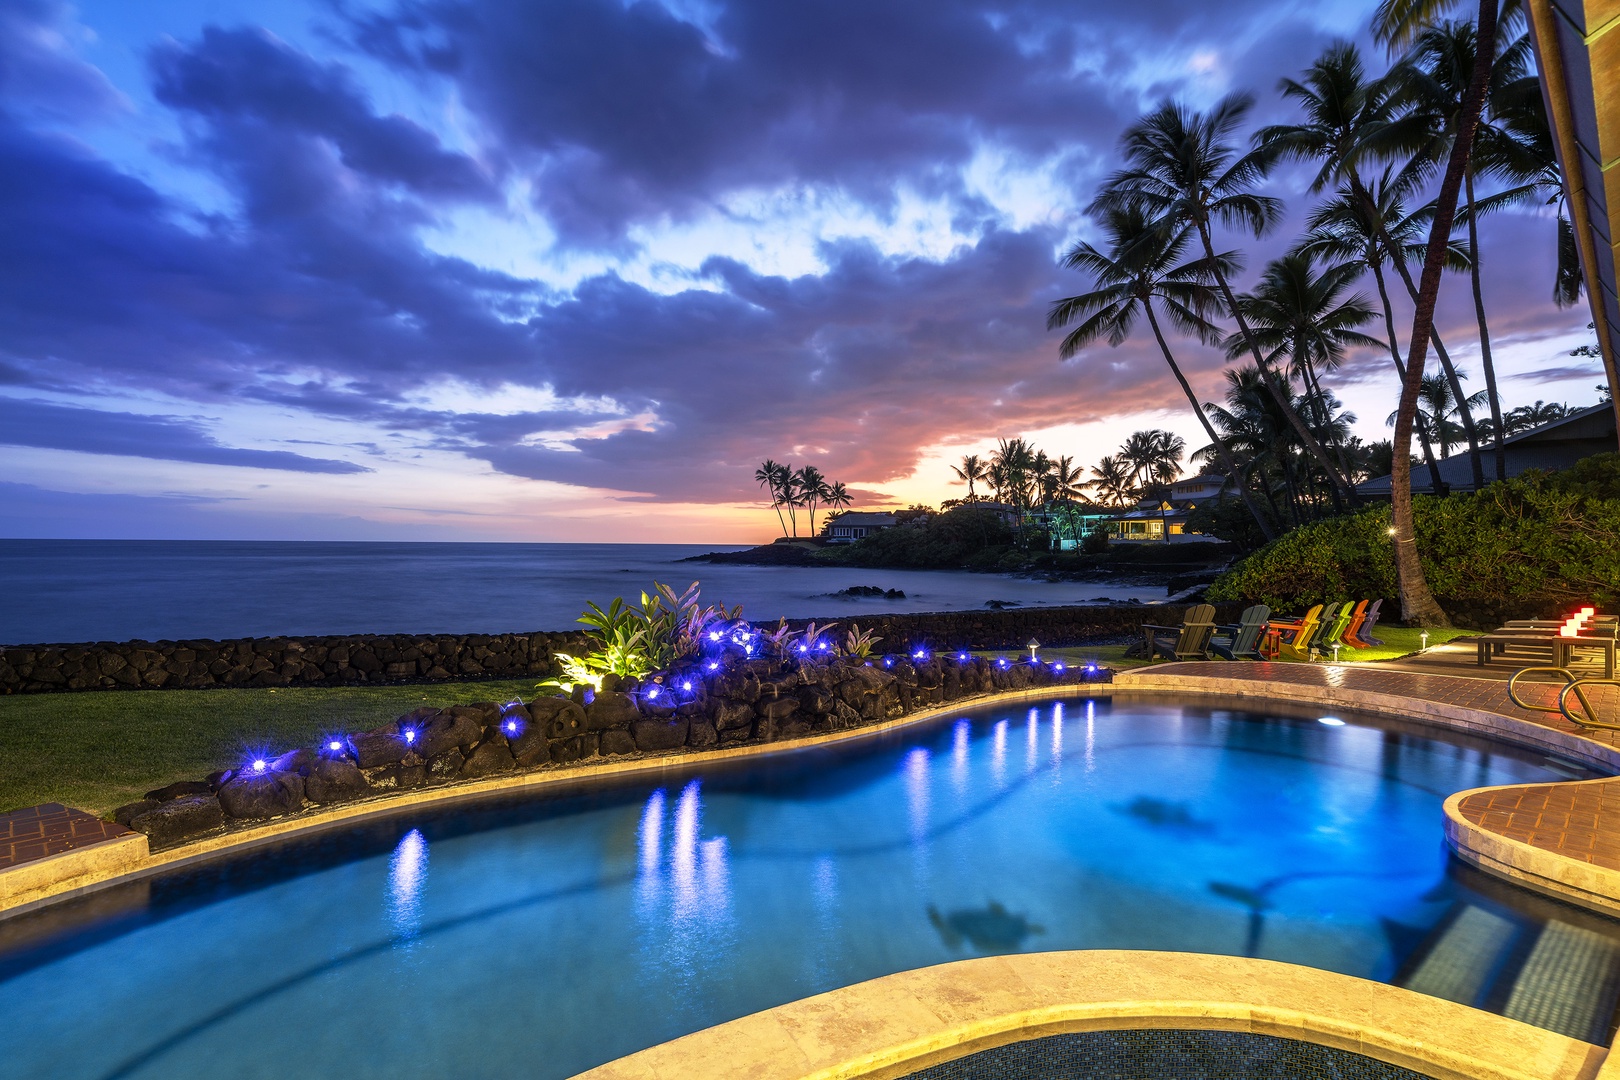 Kailua Kona Vacation Rentals, Hale Pua - Just as the sets into the horizon line!